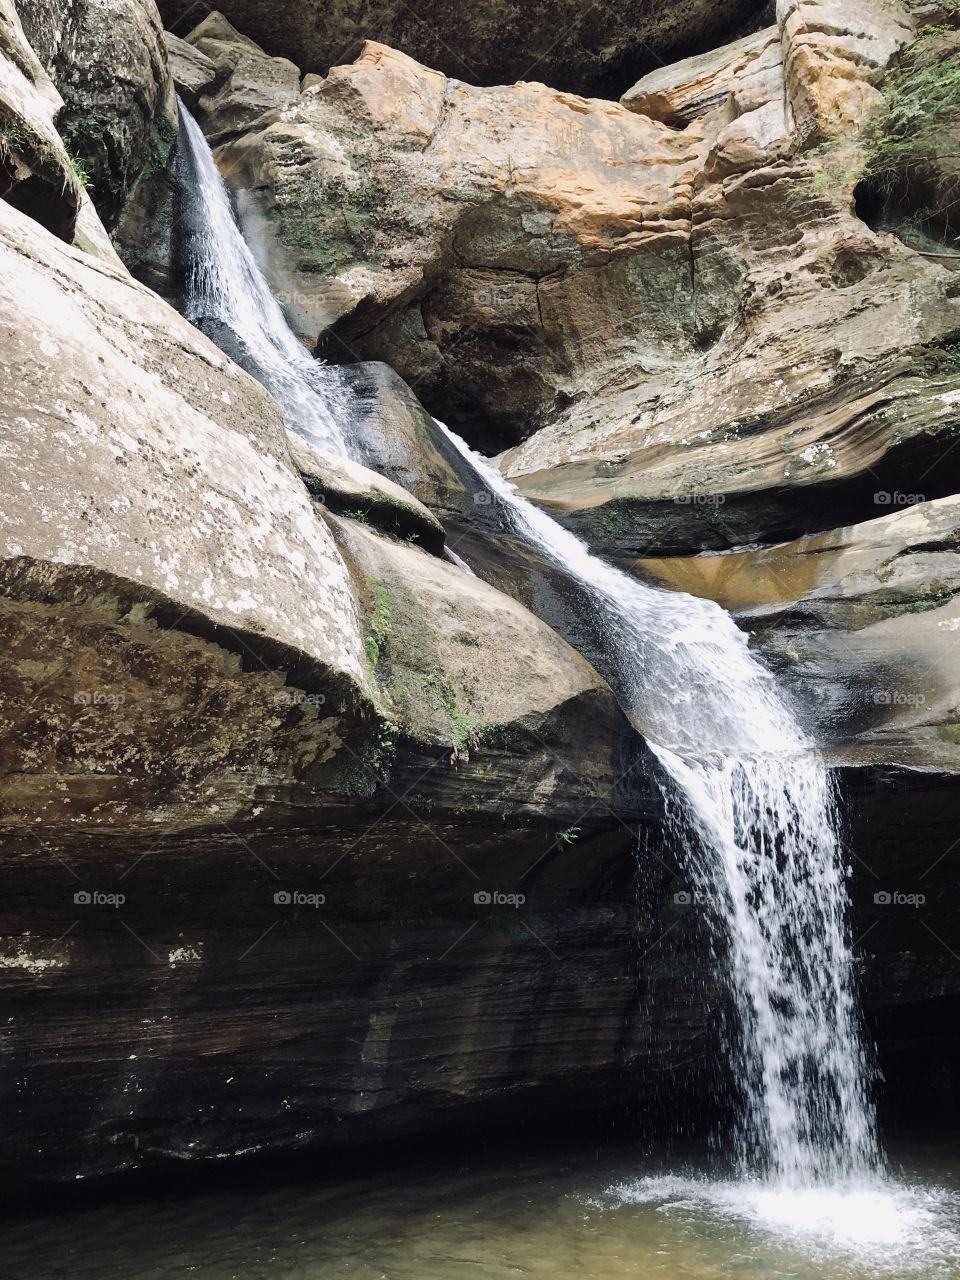 Cedar falls, Ohio